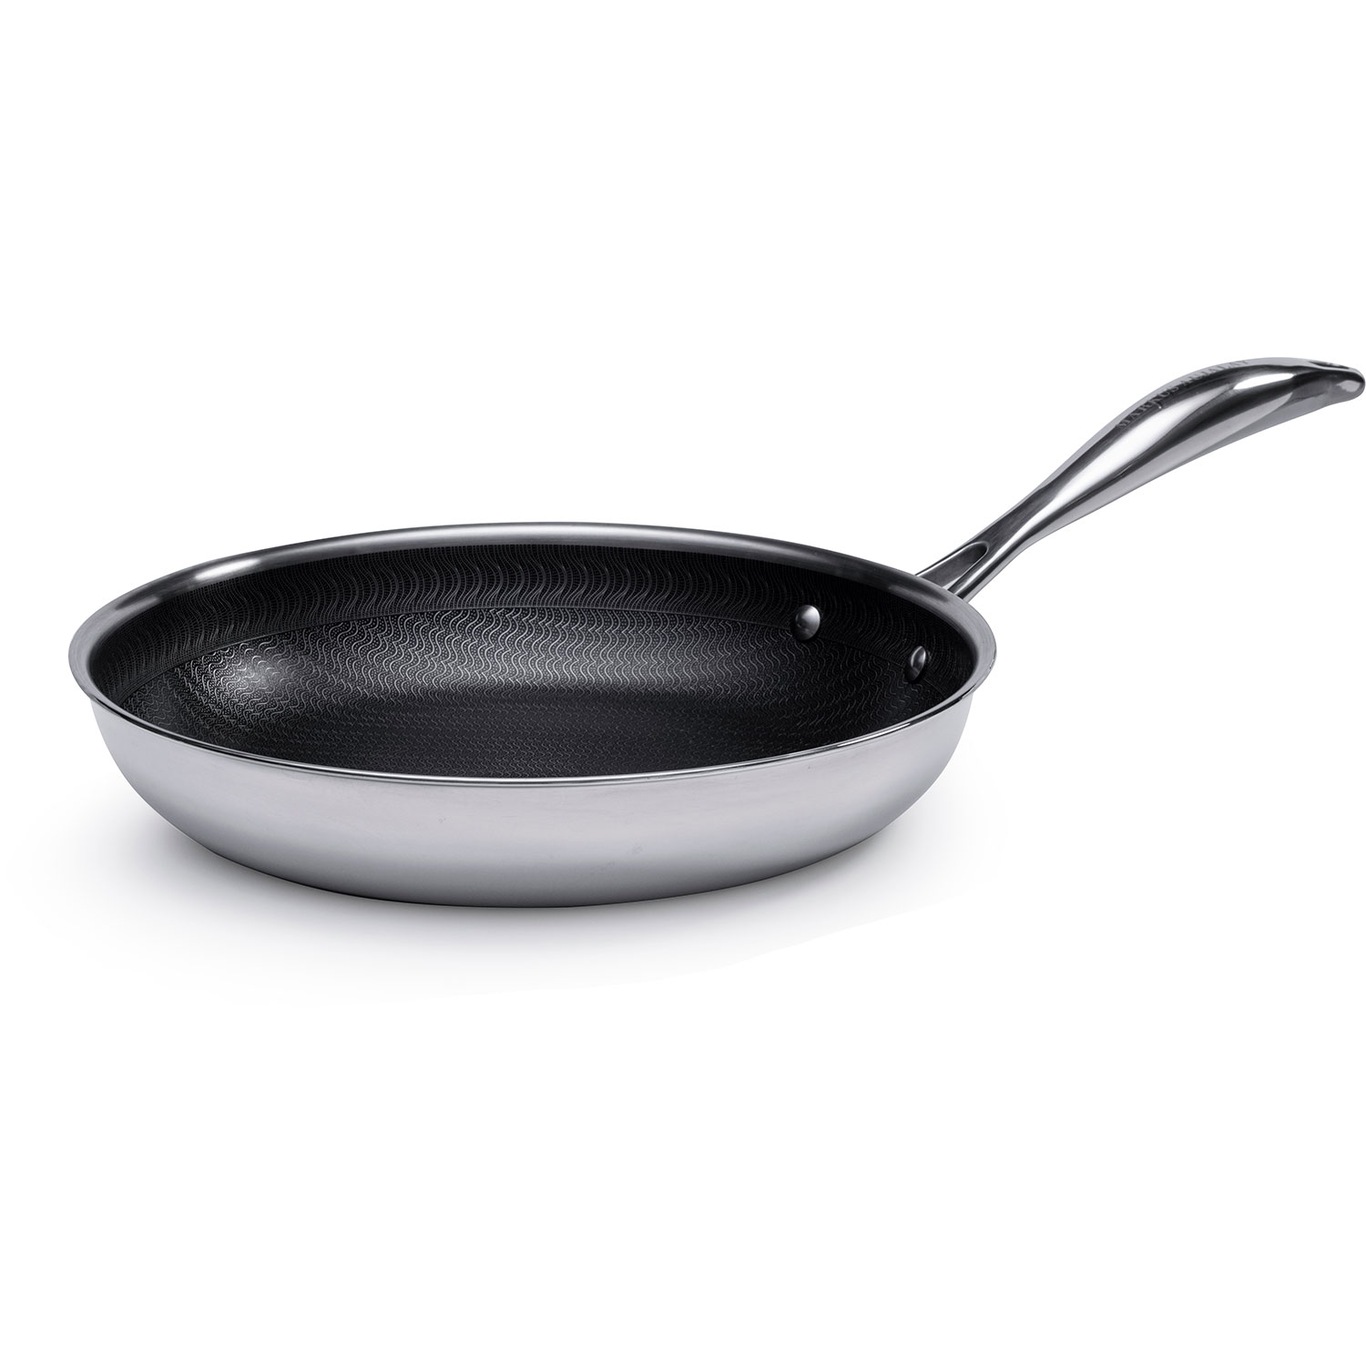 Markus Steelsafe Frying Pan, 24 cm